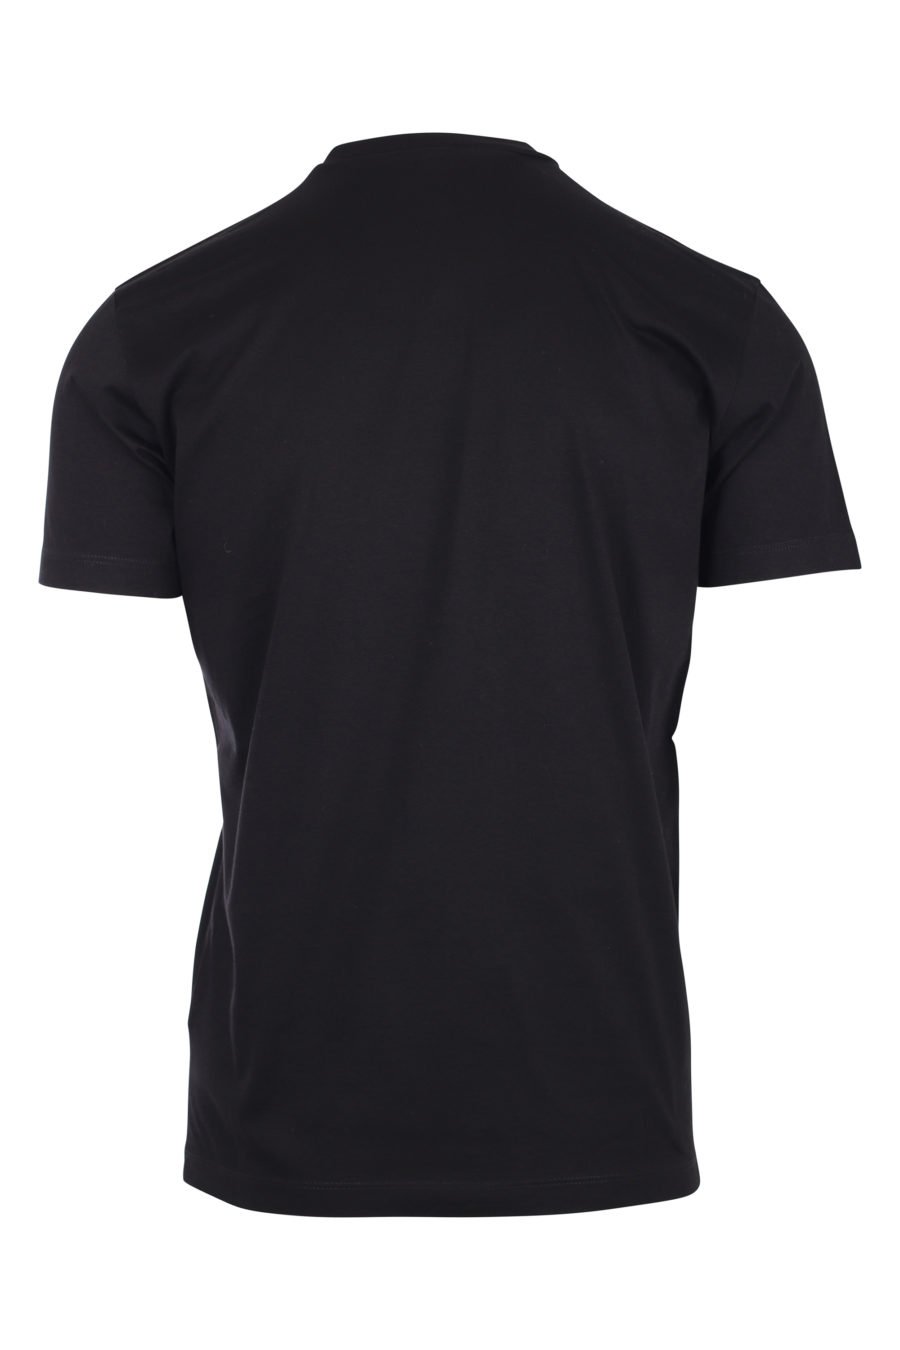 Black T-shirt with "icon" logo - IMG 9790